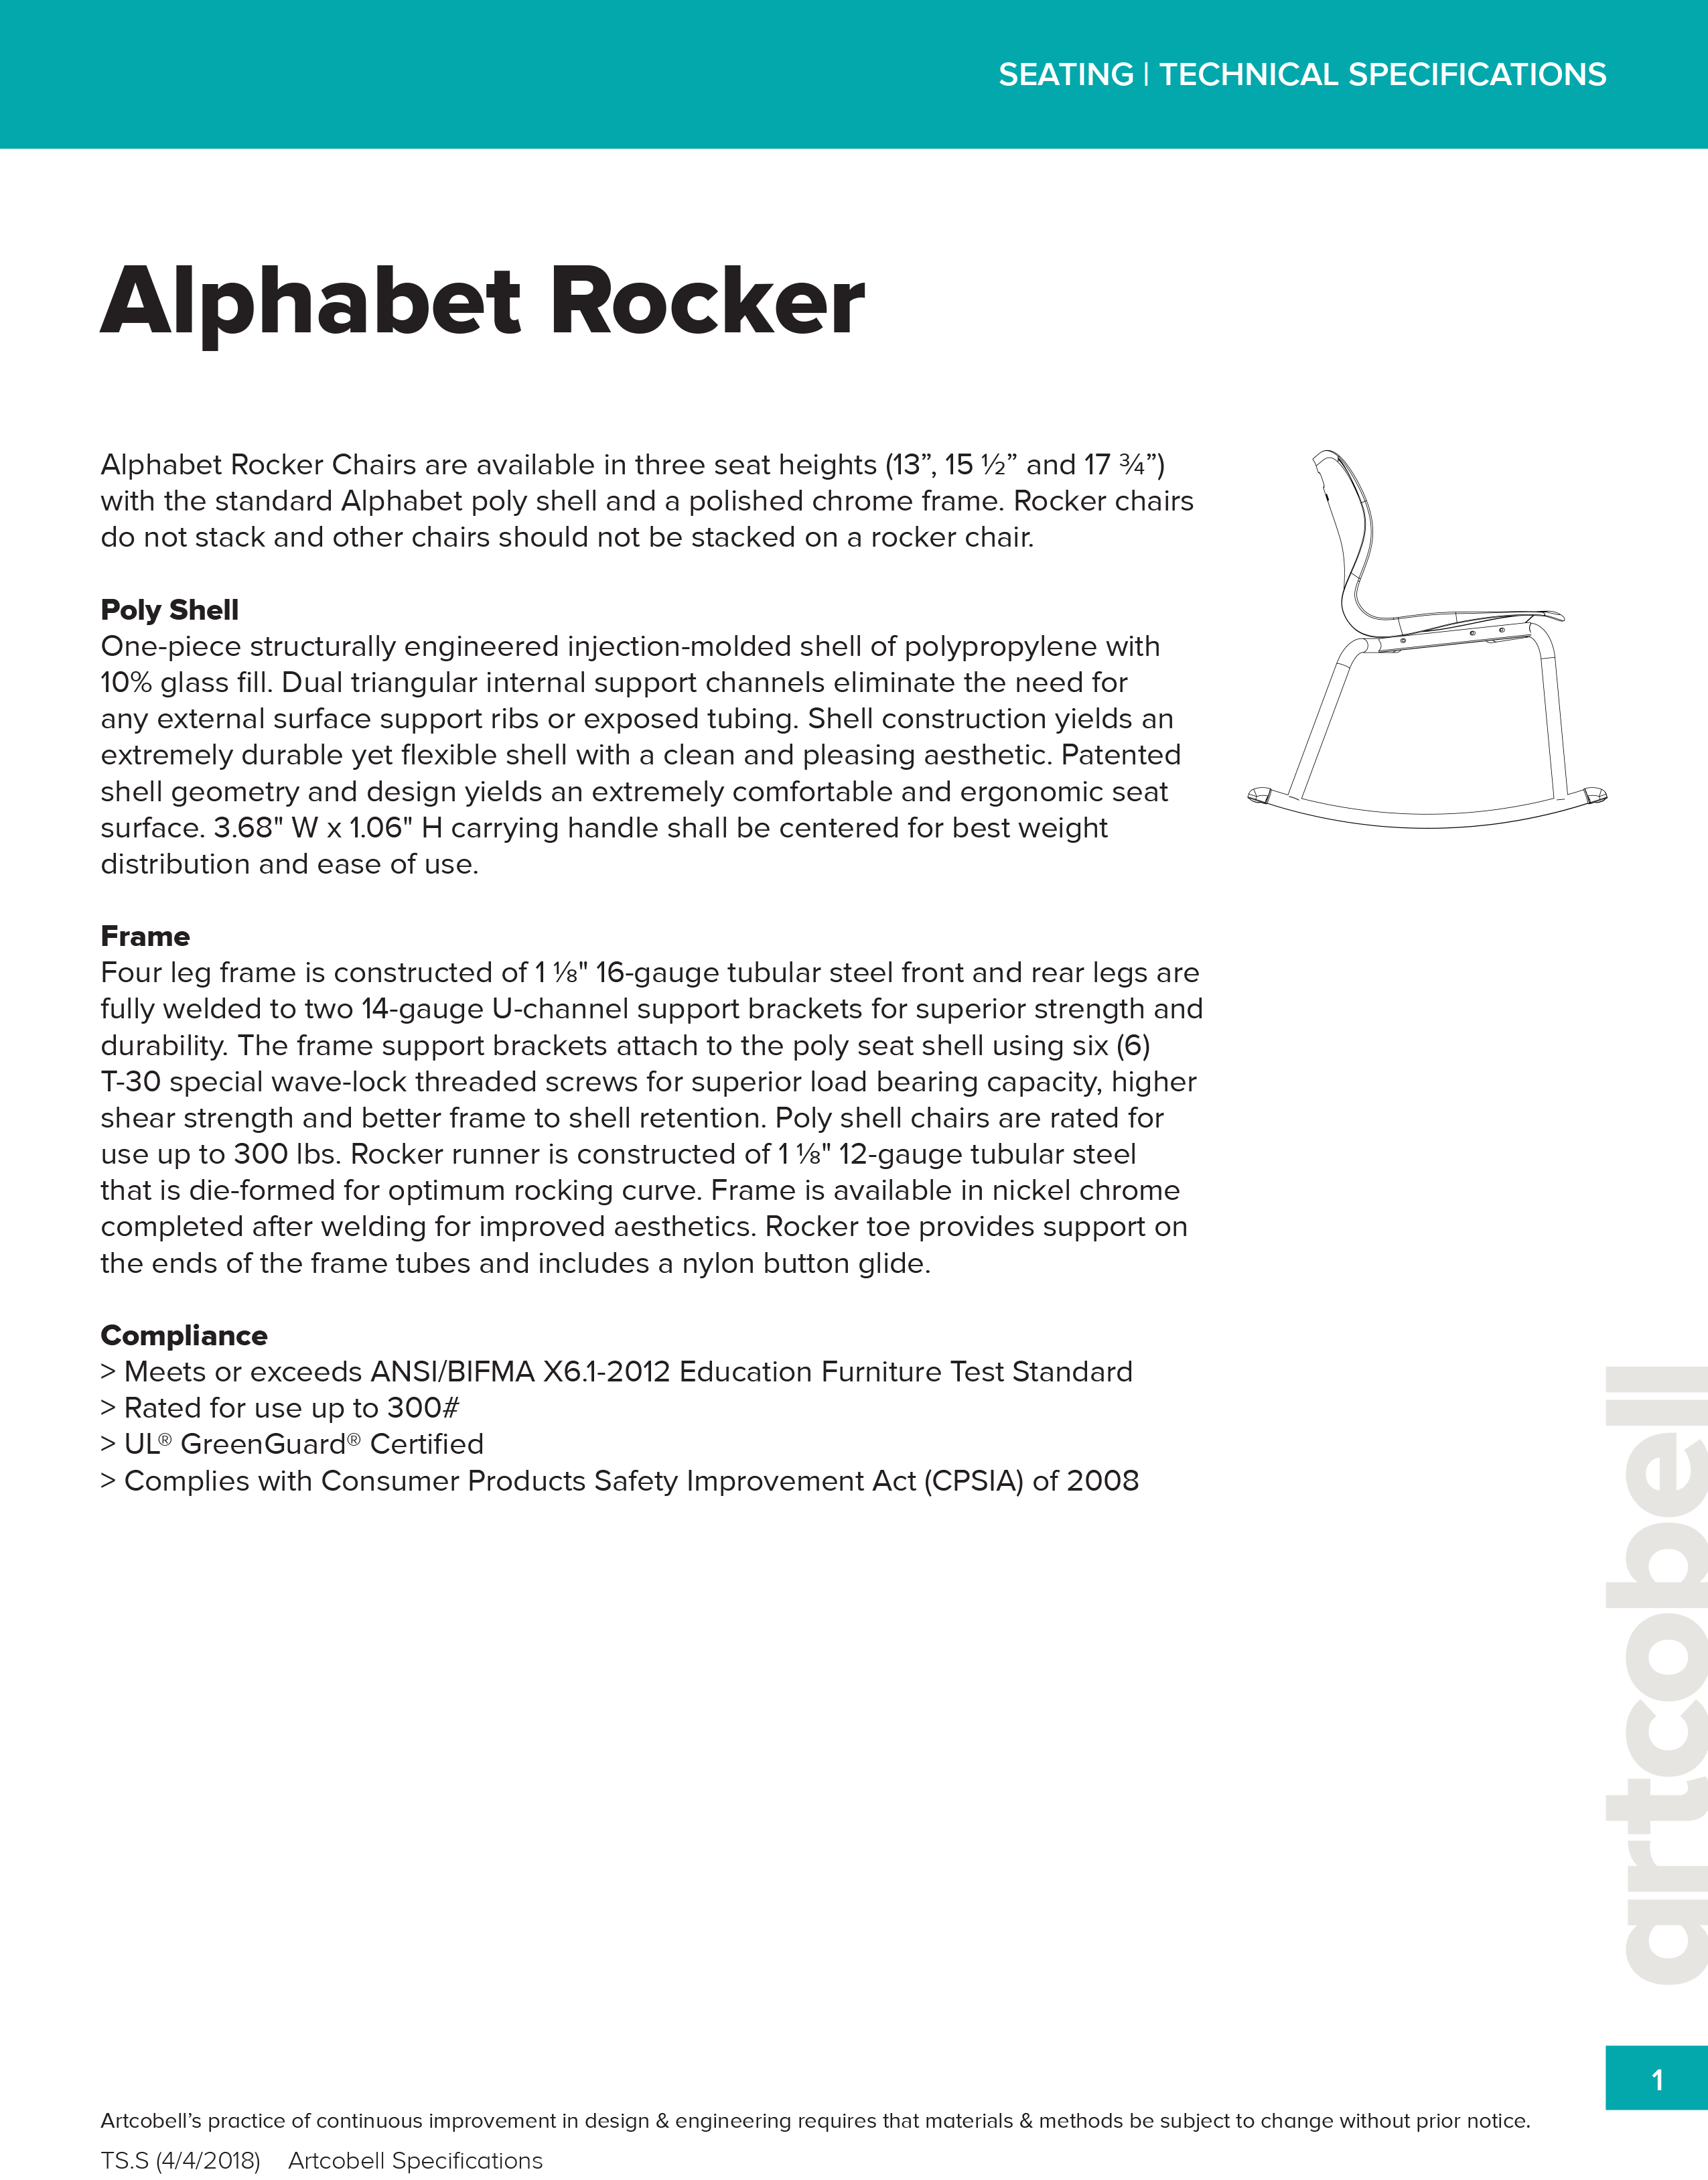 SeatingSpecifications_AlphabetRocker-1 copy